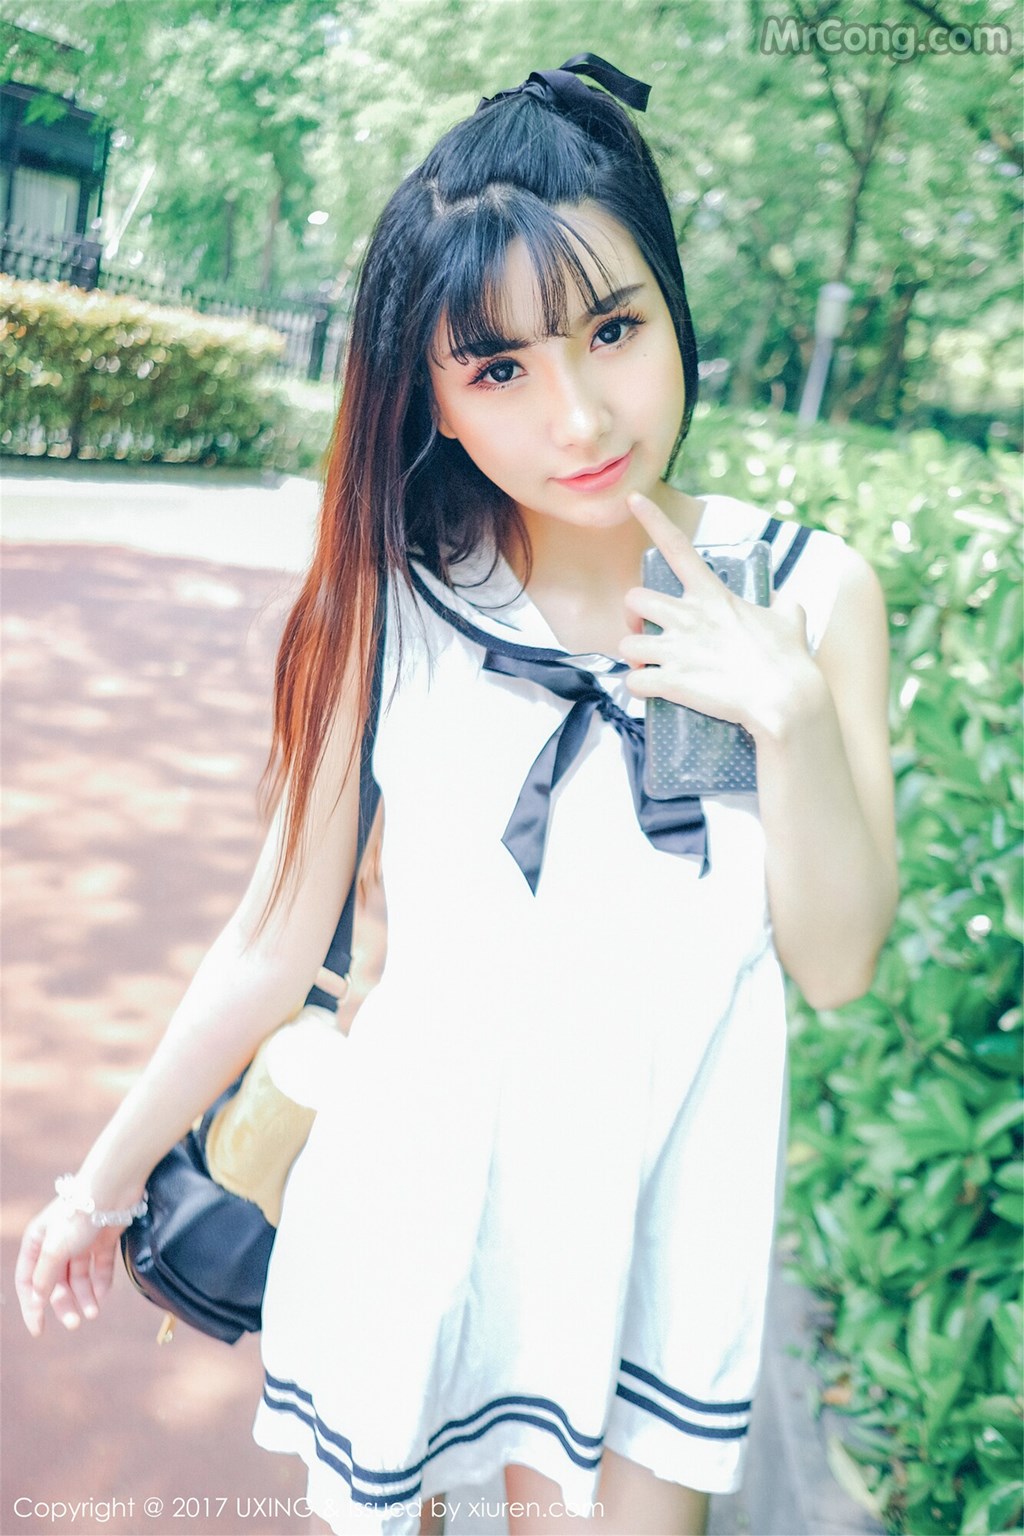 UXING Vol.050: Sunny's model (晓 茜) (48 photos)